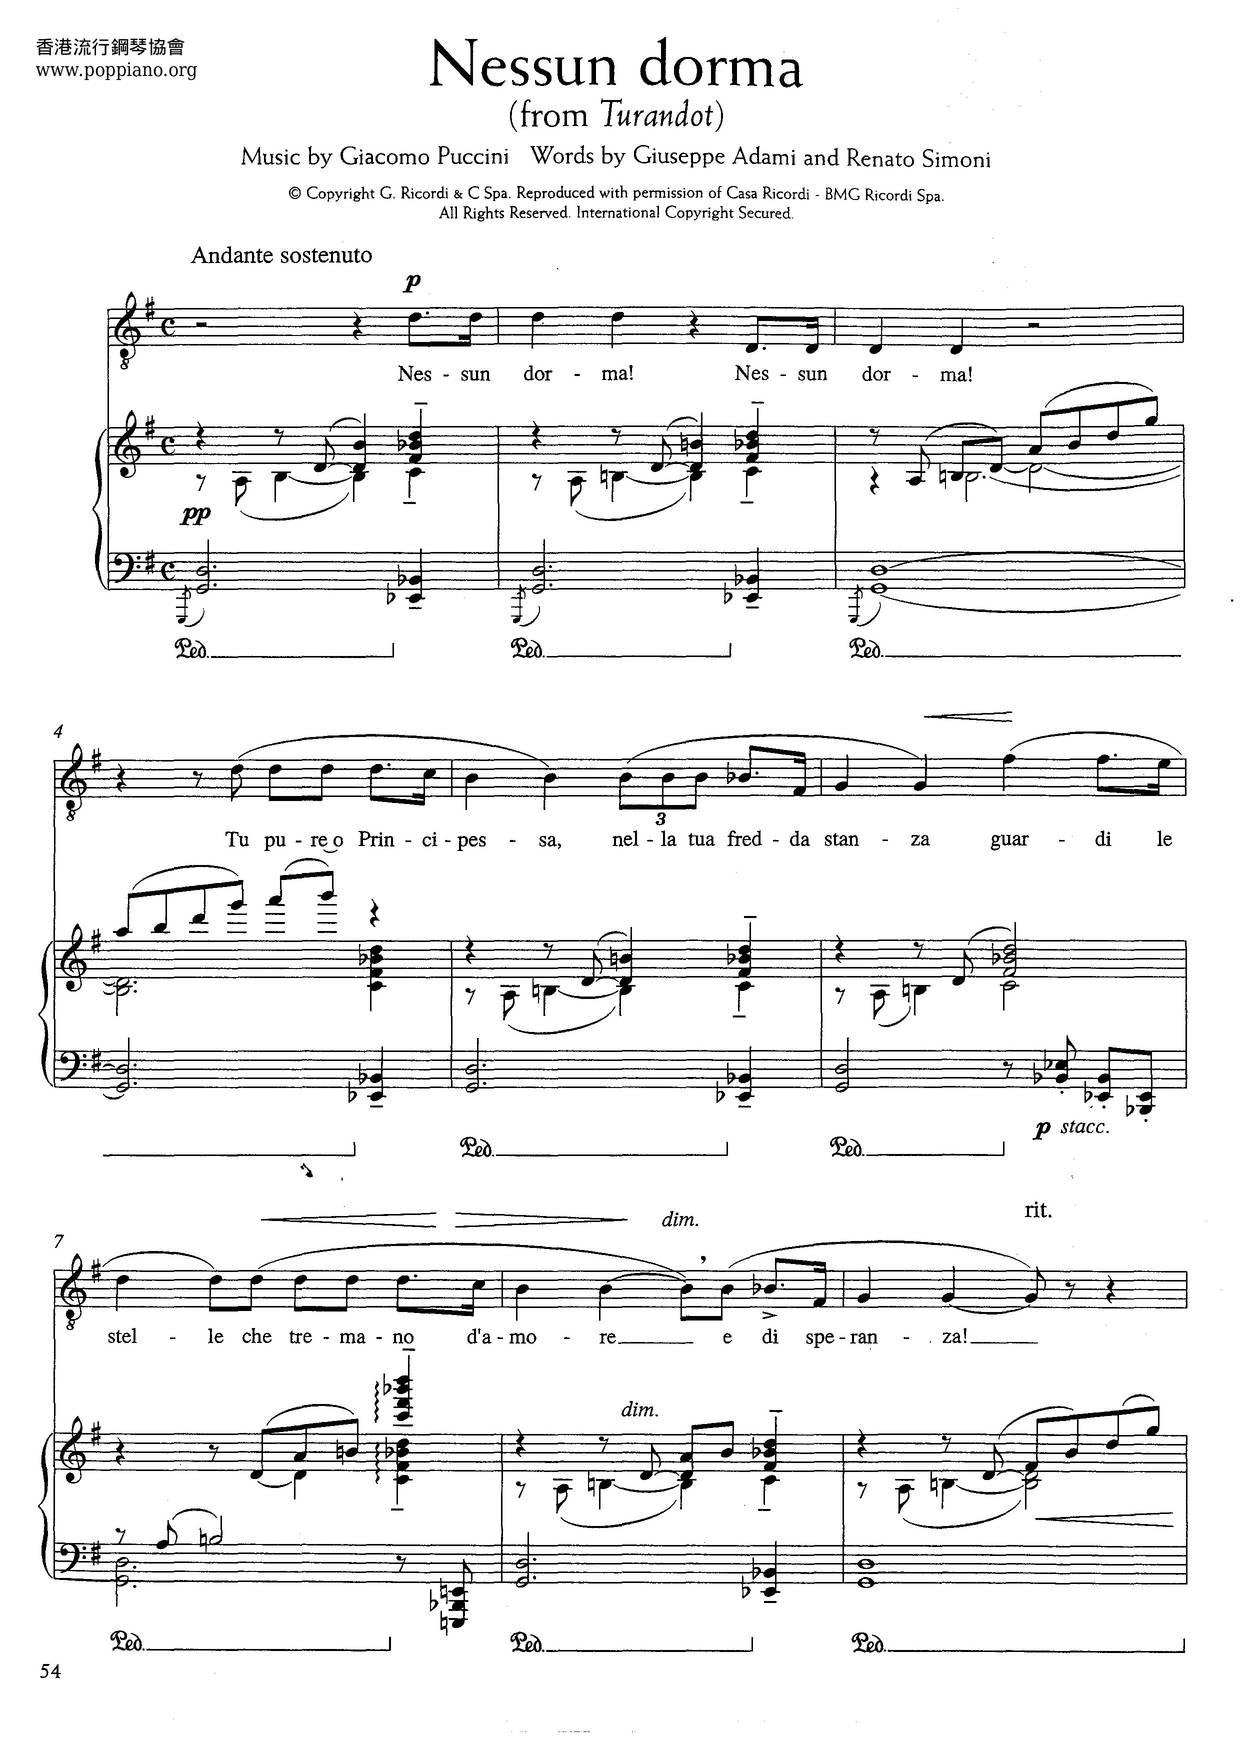 Nessun Dorma From Turandot (Puccini)ピアノ譜